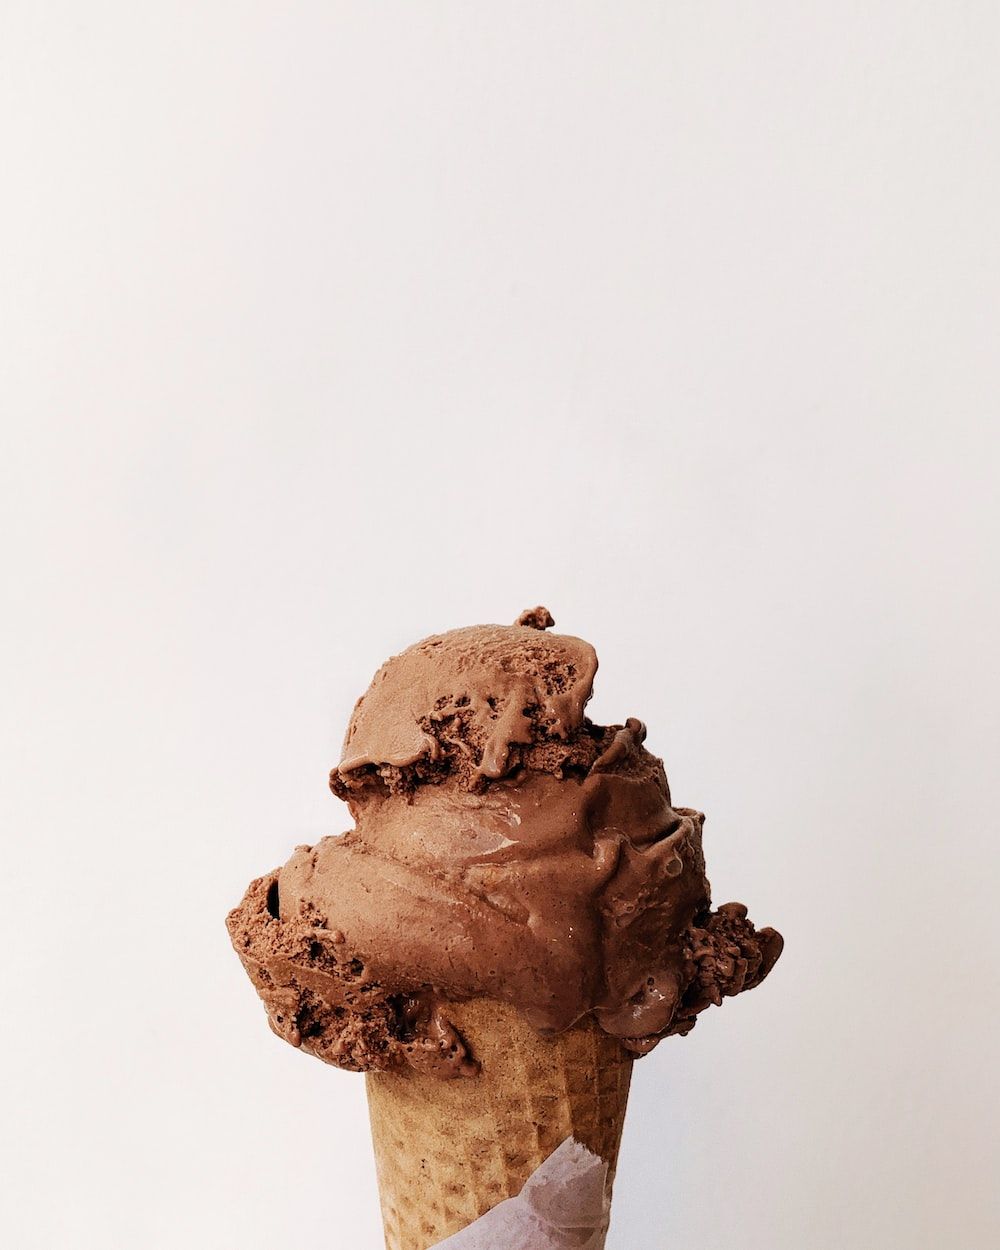 chocolate ice cream photo